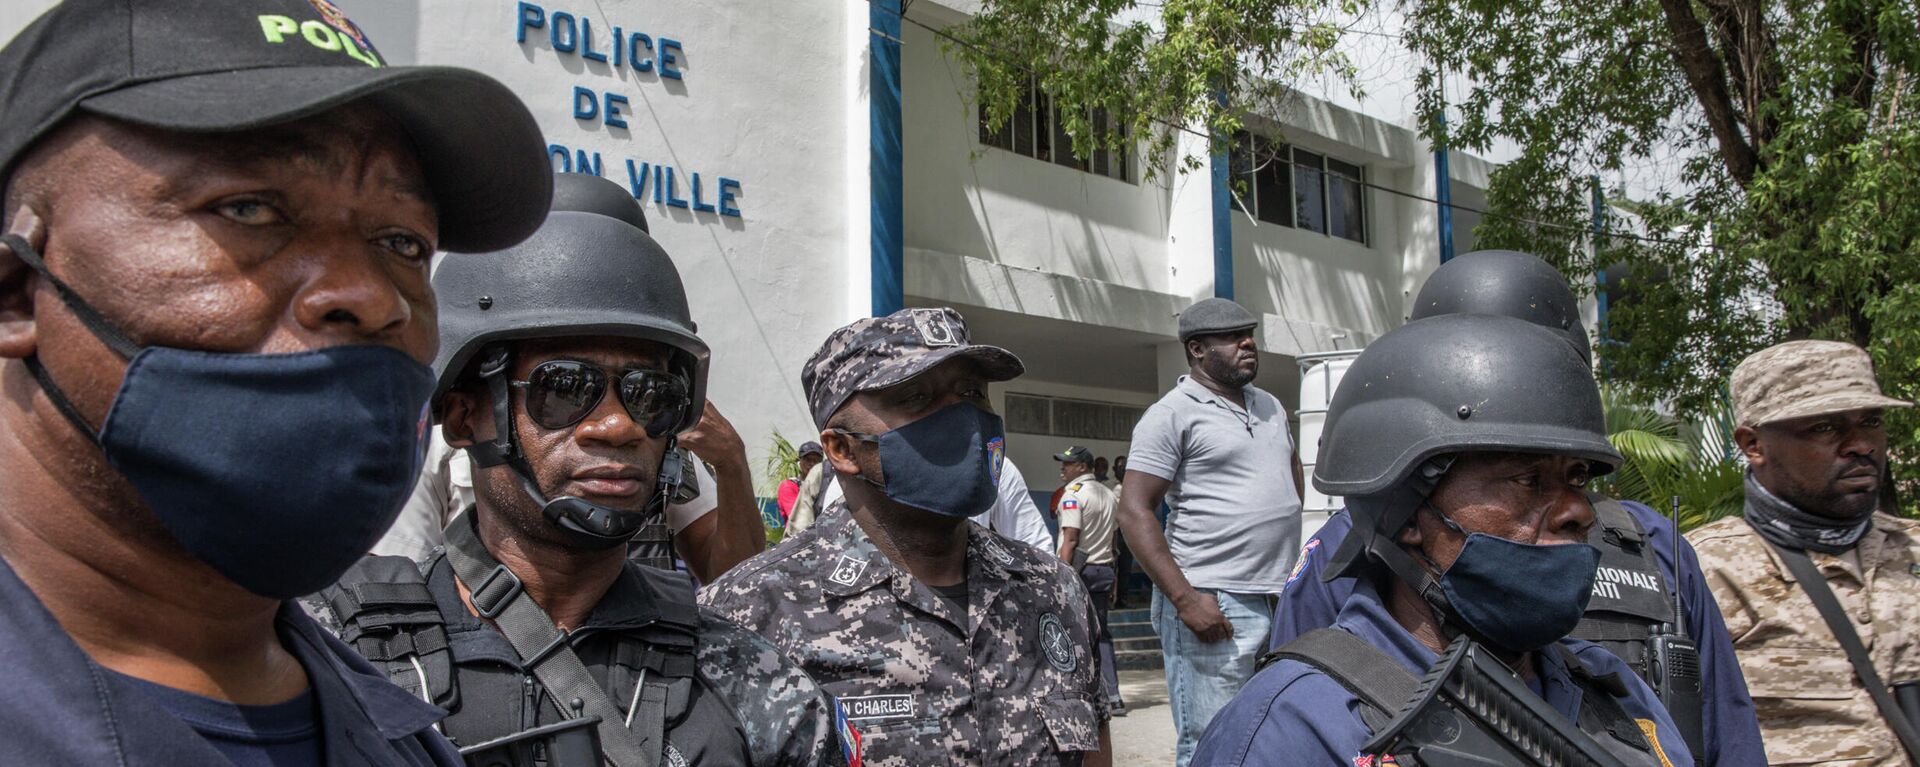 Policía de Haití en Puerto Príncipe - Sputnik Mundo, 1920, 09.07.2021